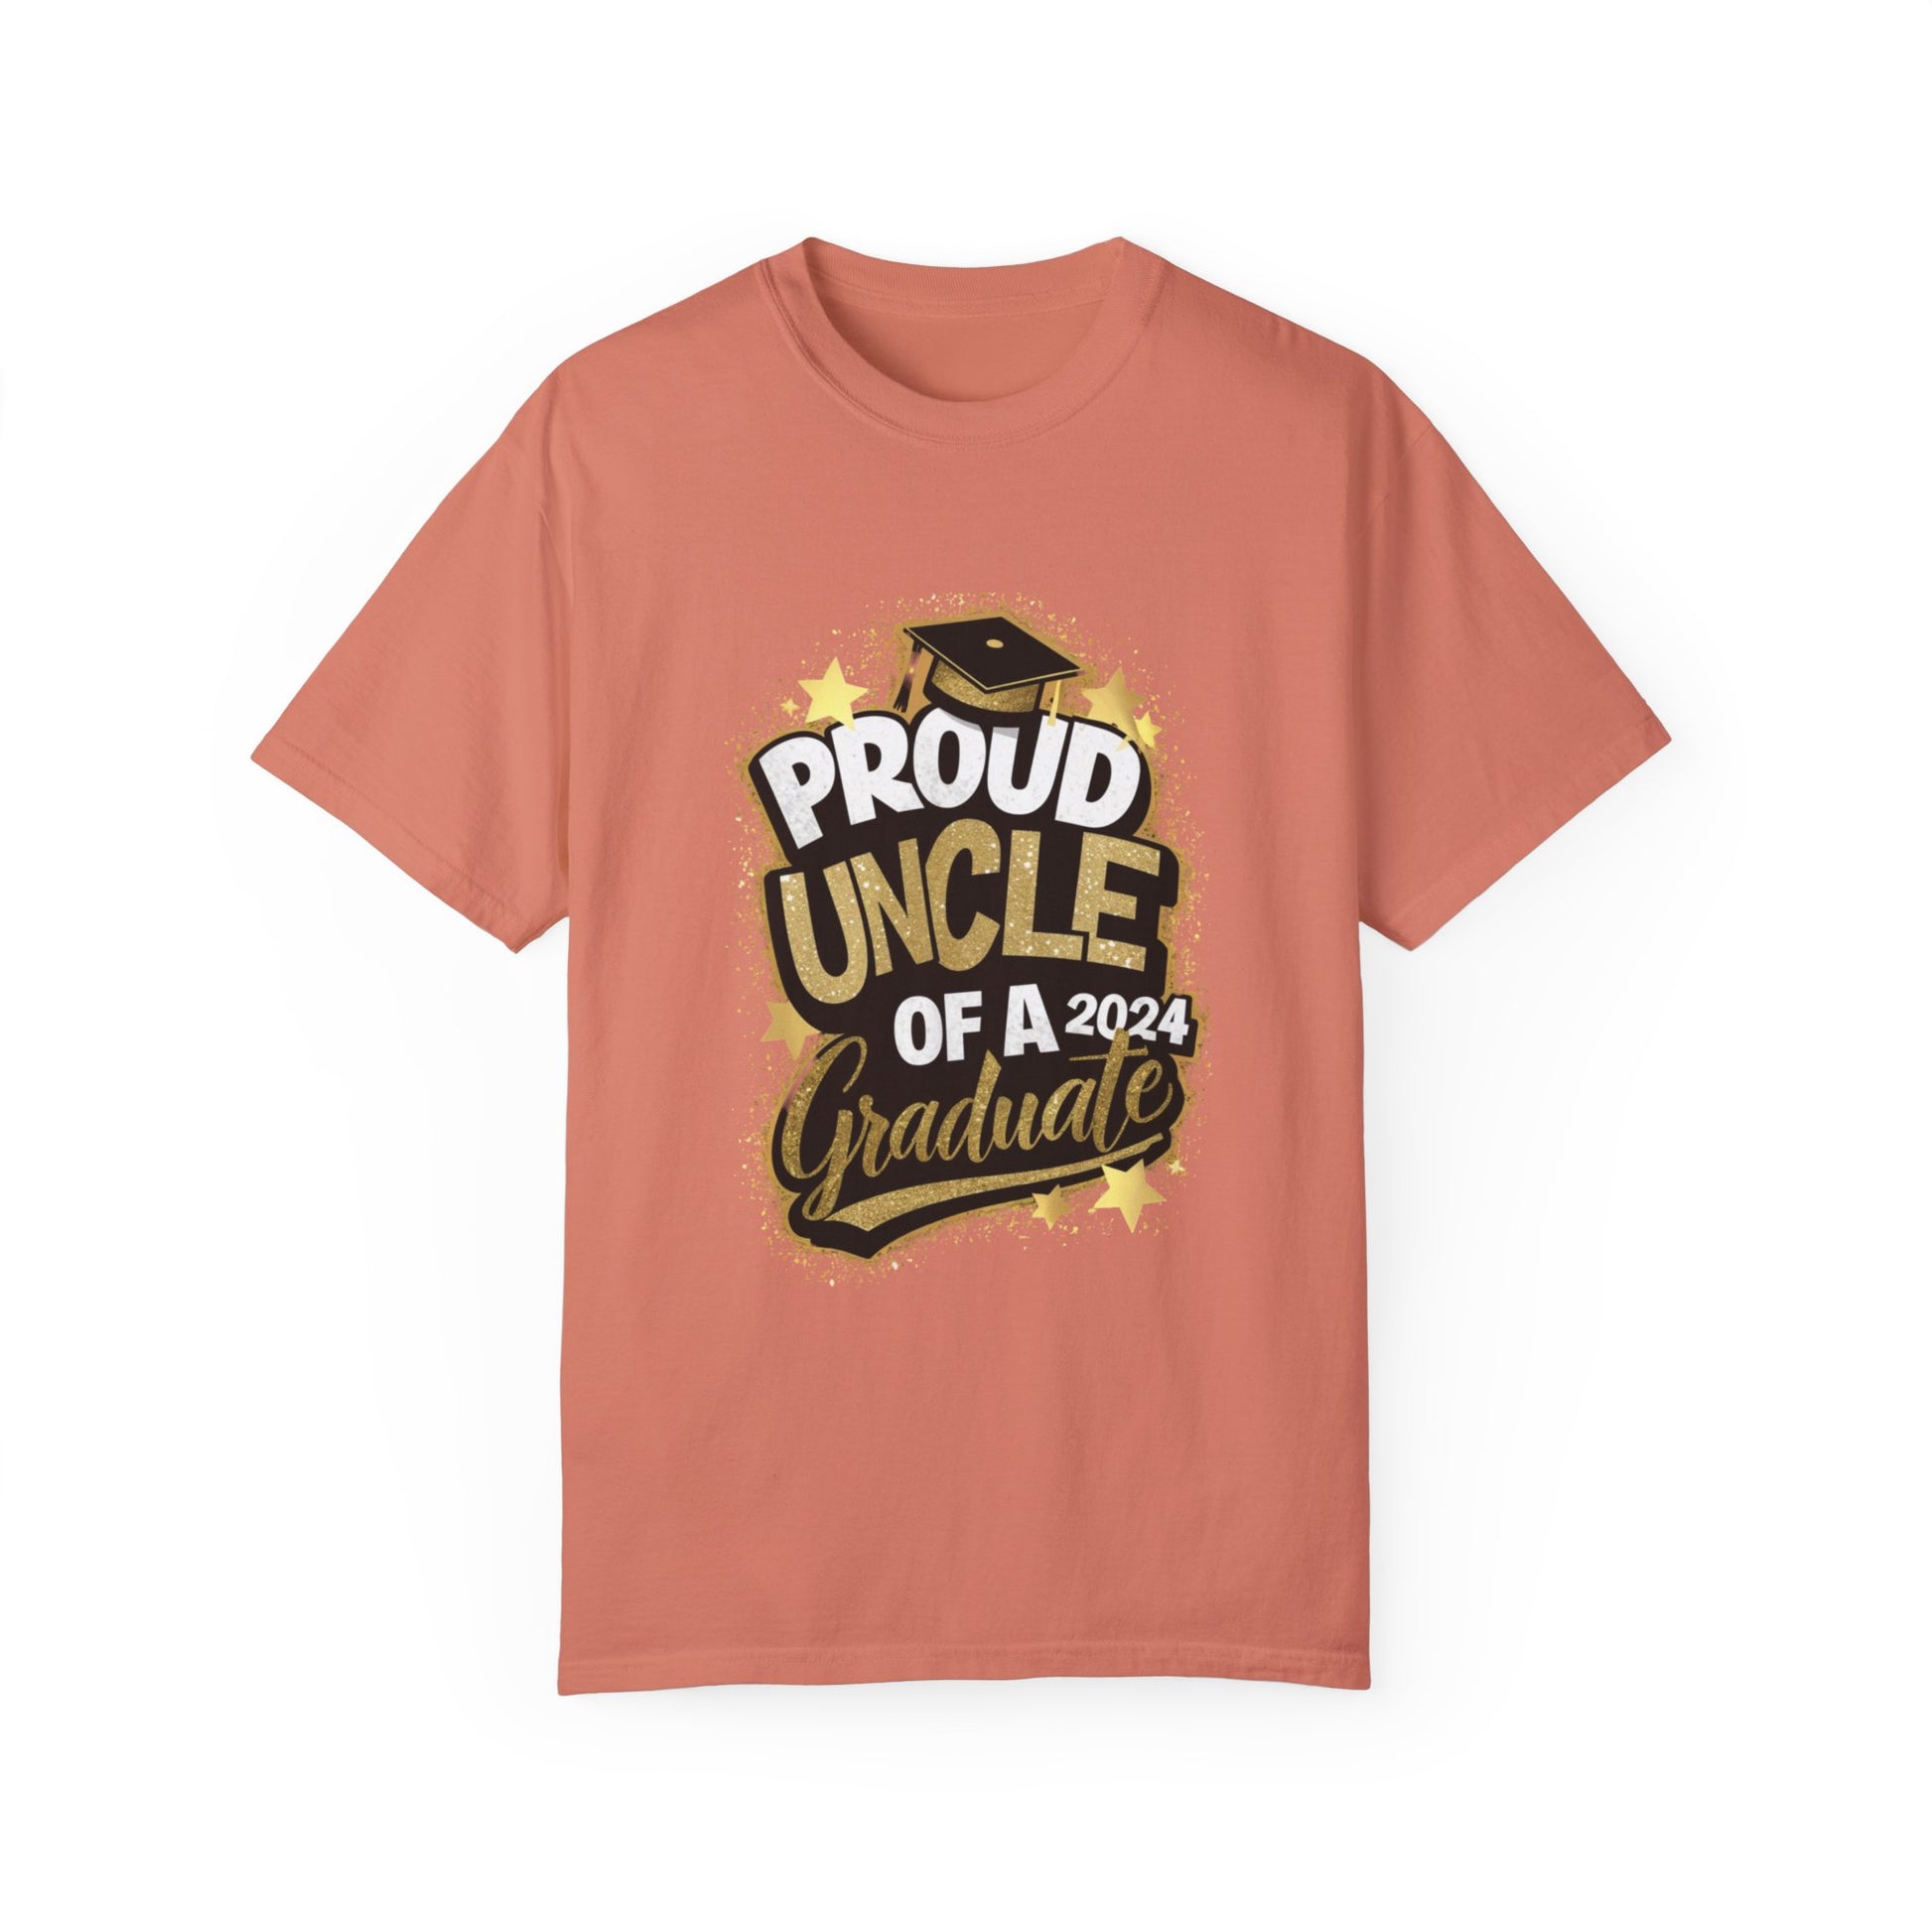 Proud Uncle of a 2024 Graduate Unisex Garment-dyed T-shirt Cotton Funny Humorous Graphic Soft Premium Unisex Men Women Terracotta T-shirt Birthday Gift-14